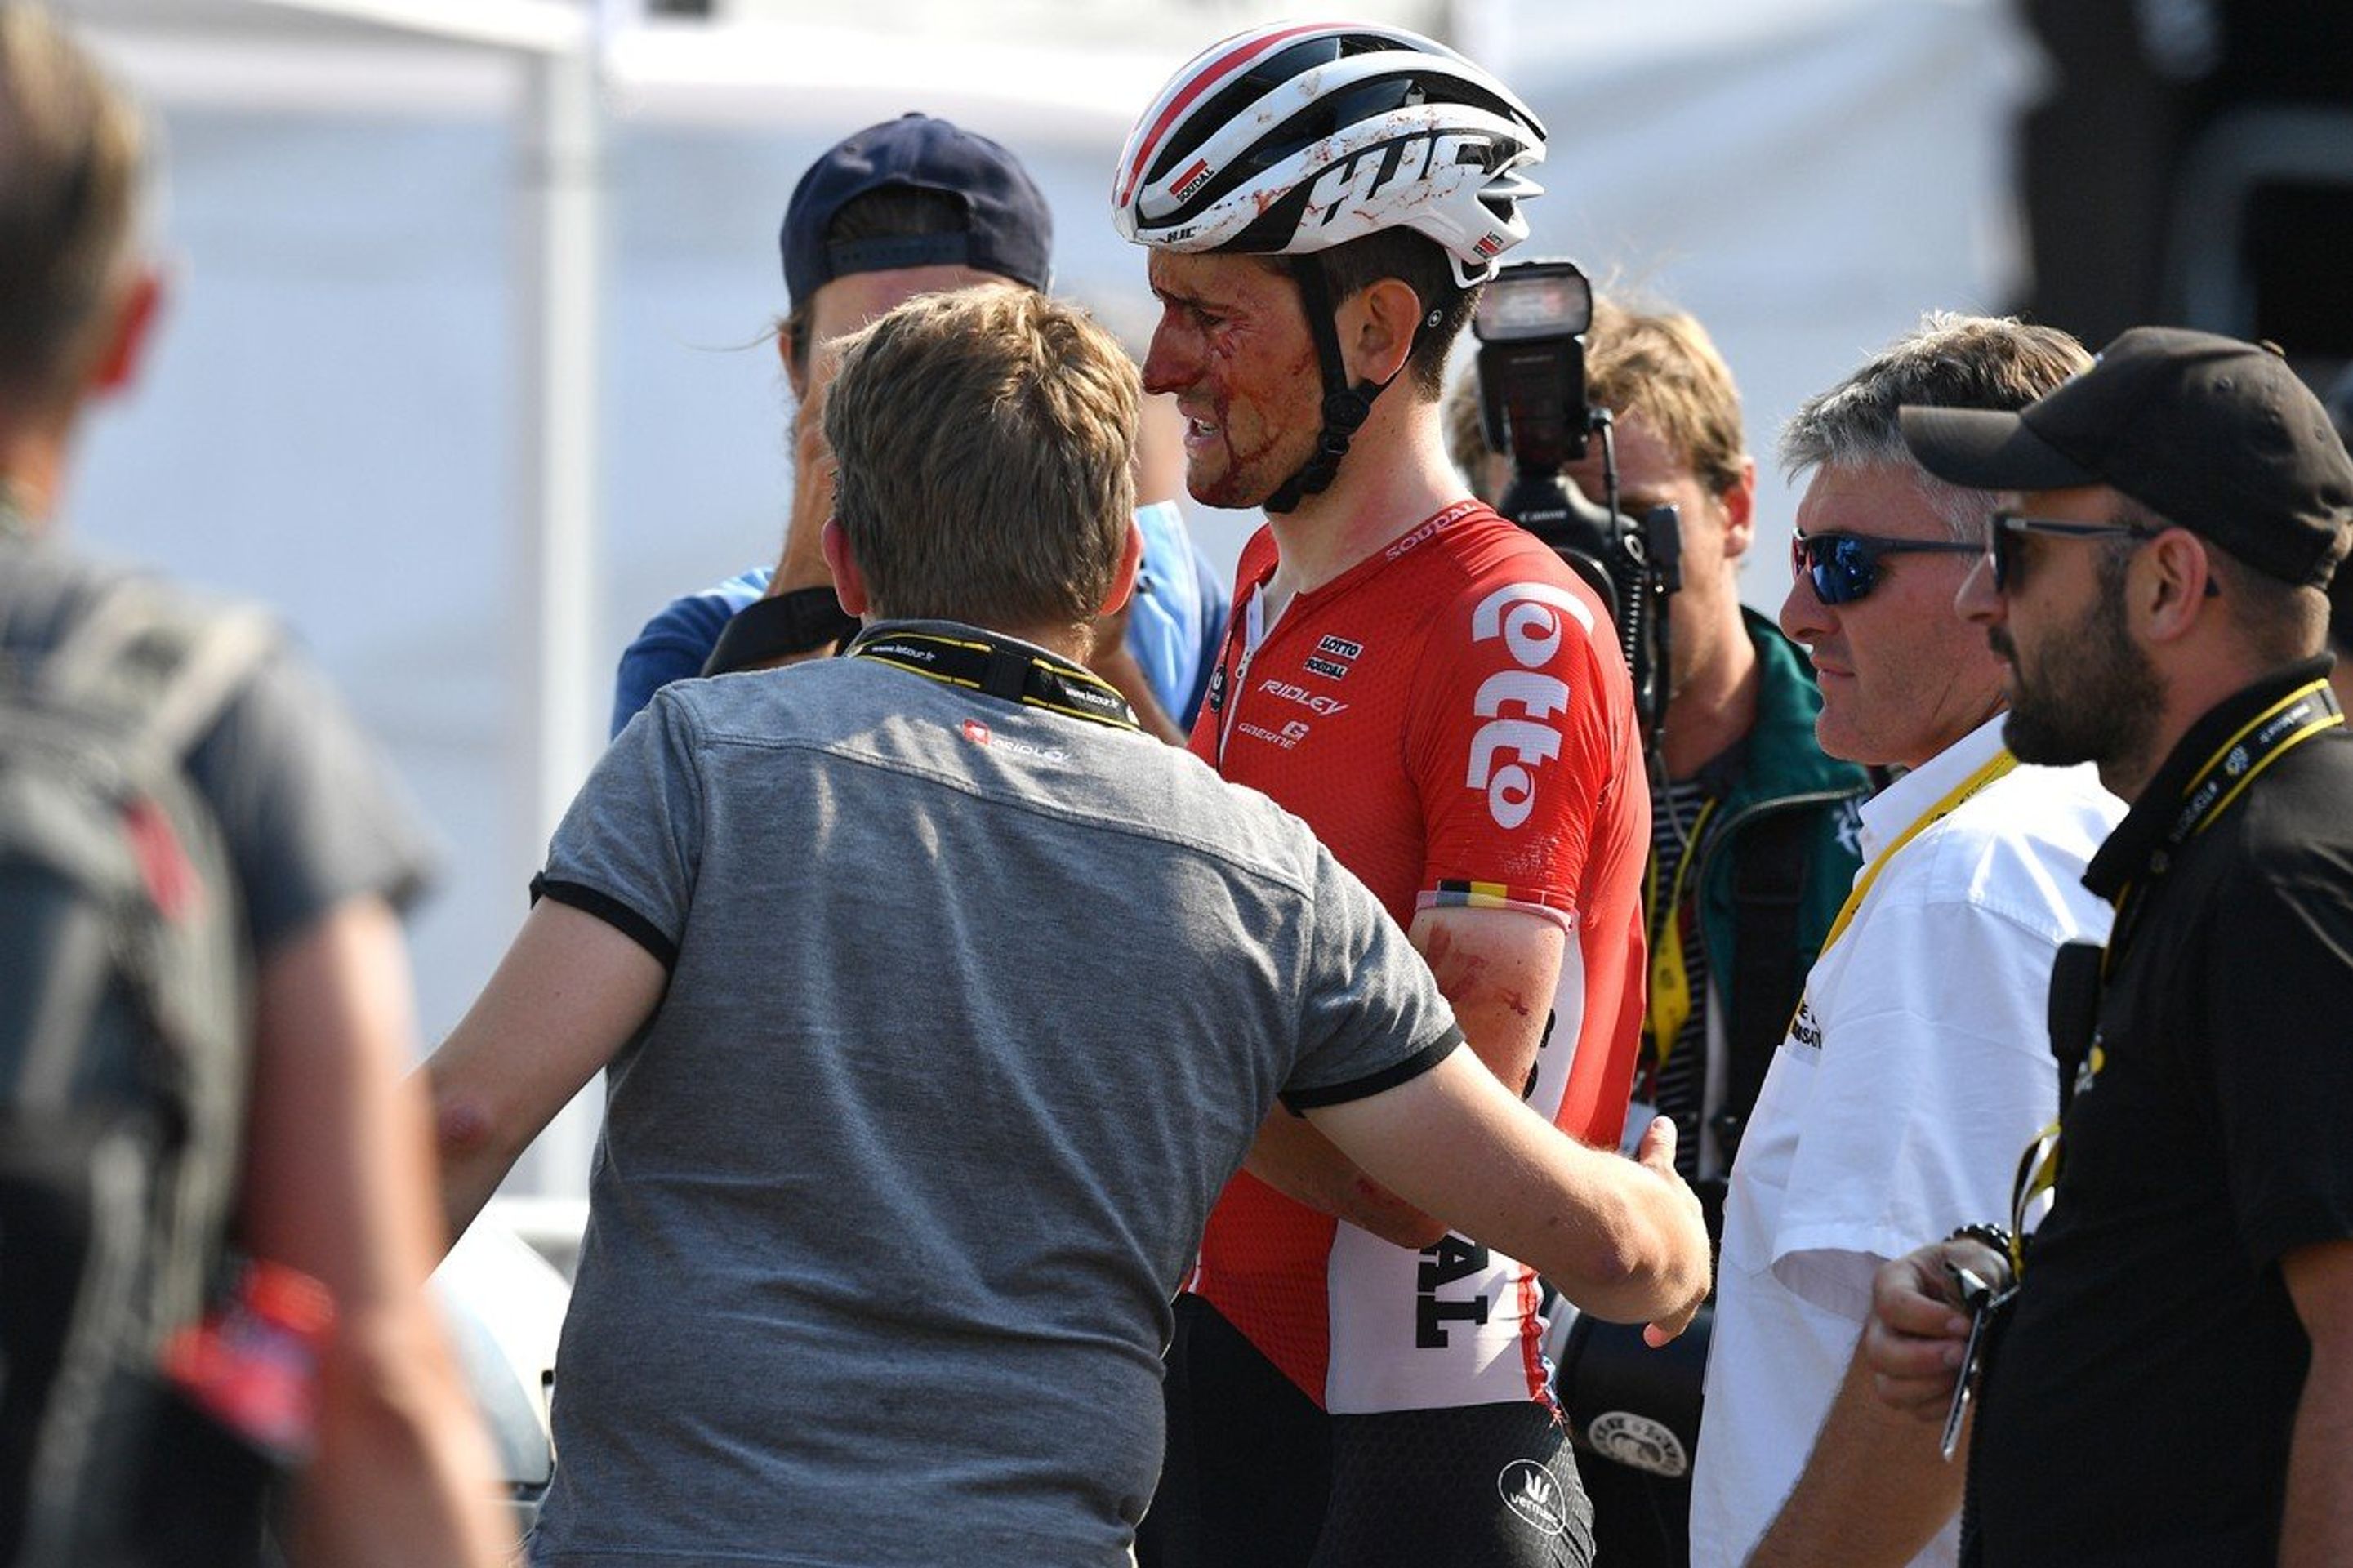 Tiesj Benoot - GALERIE: Belgický cyklista dokončil etapu na Tour celý od krve (2/4)